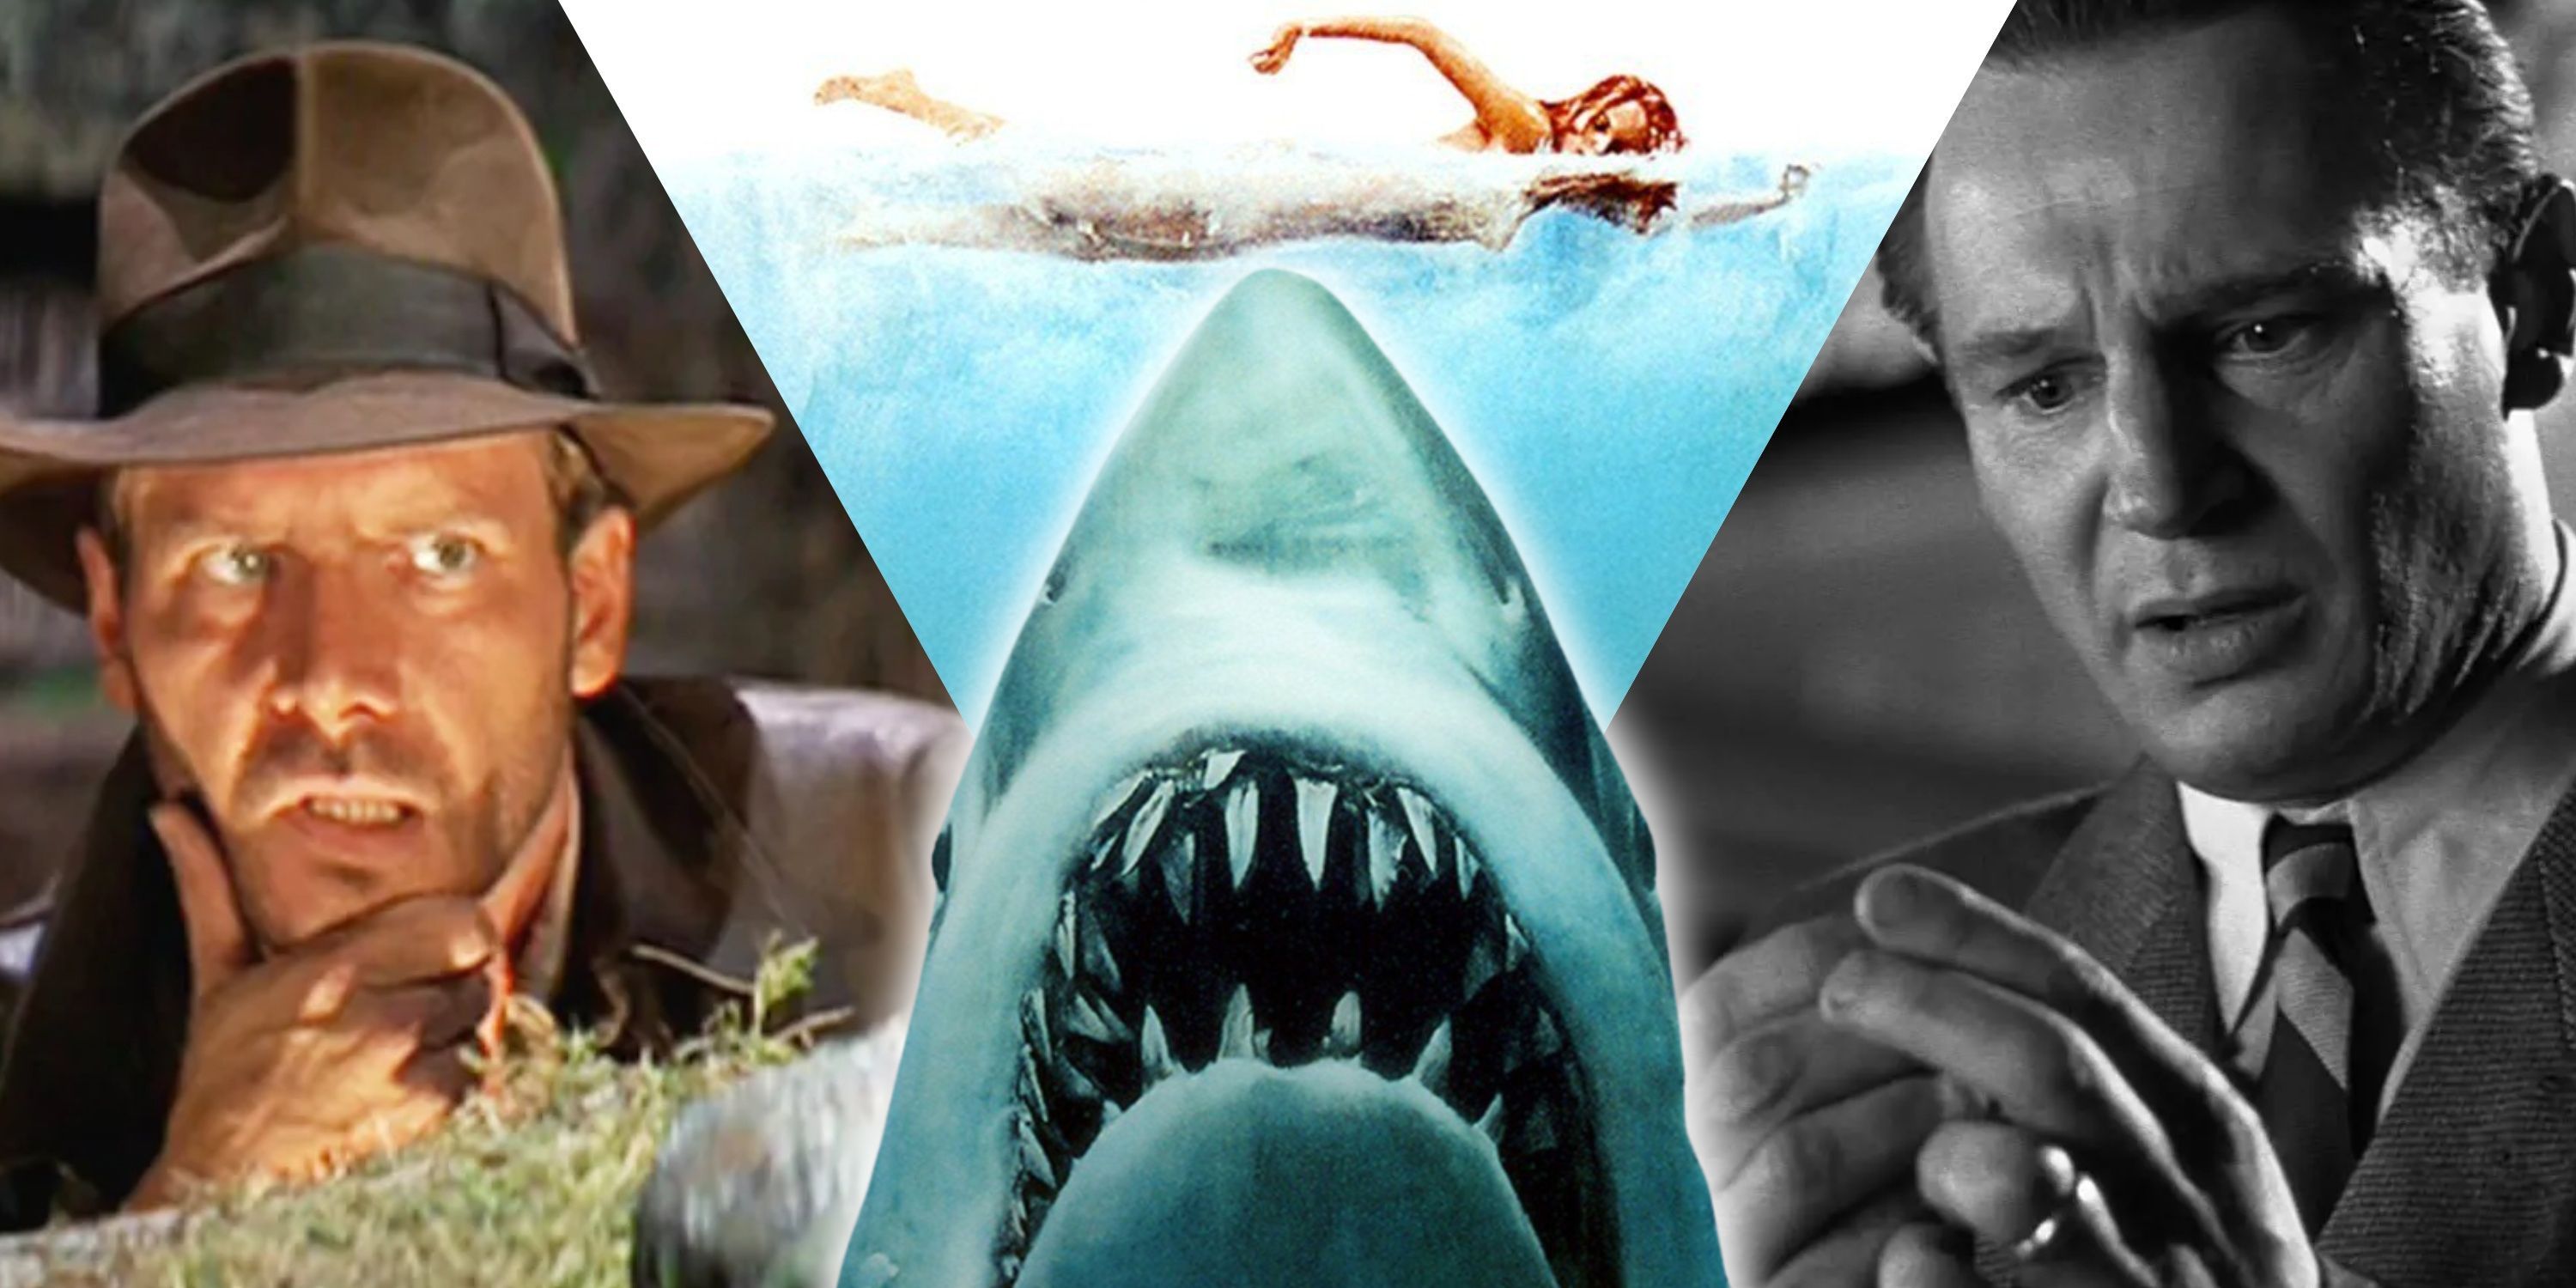 Composite image Indiana Jones, Jaws shark, Liam Neeson as Oskar Schindler